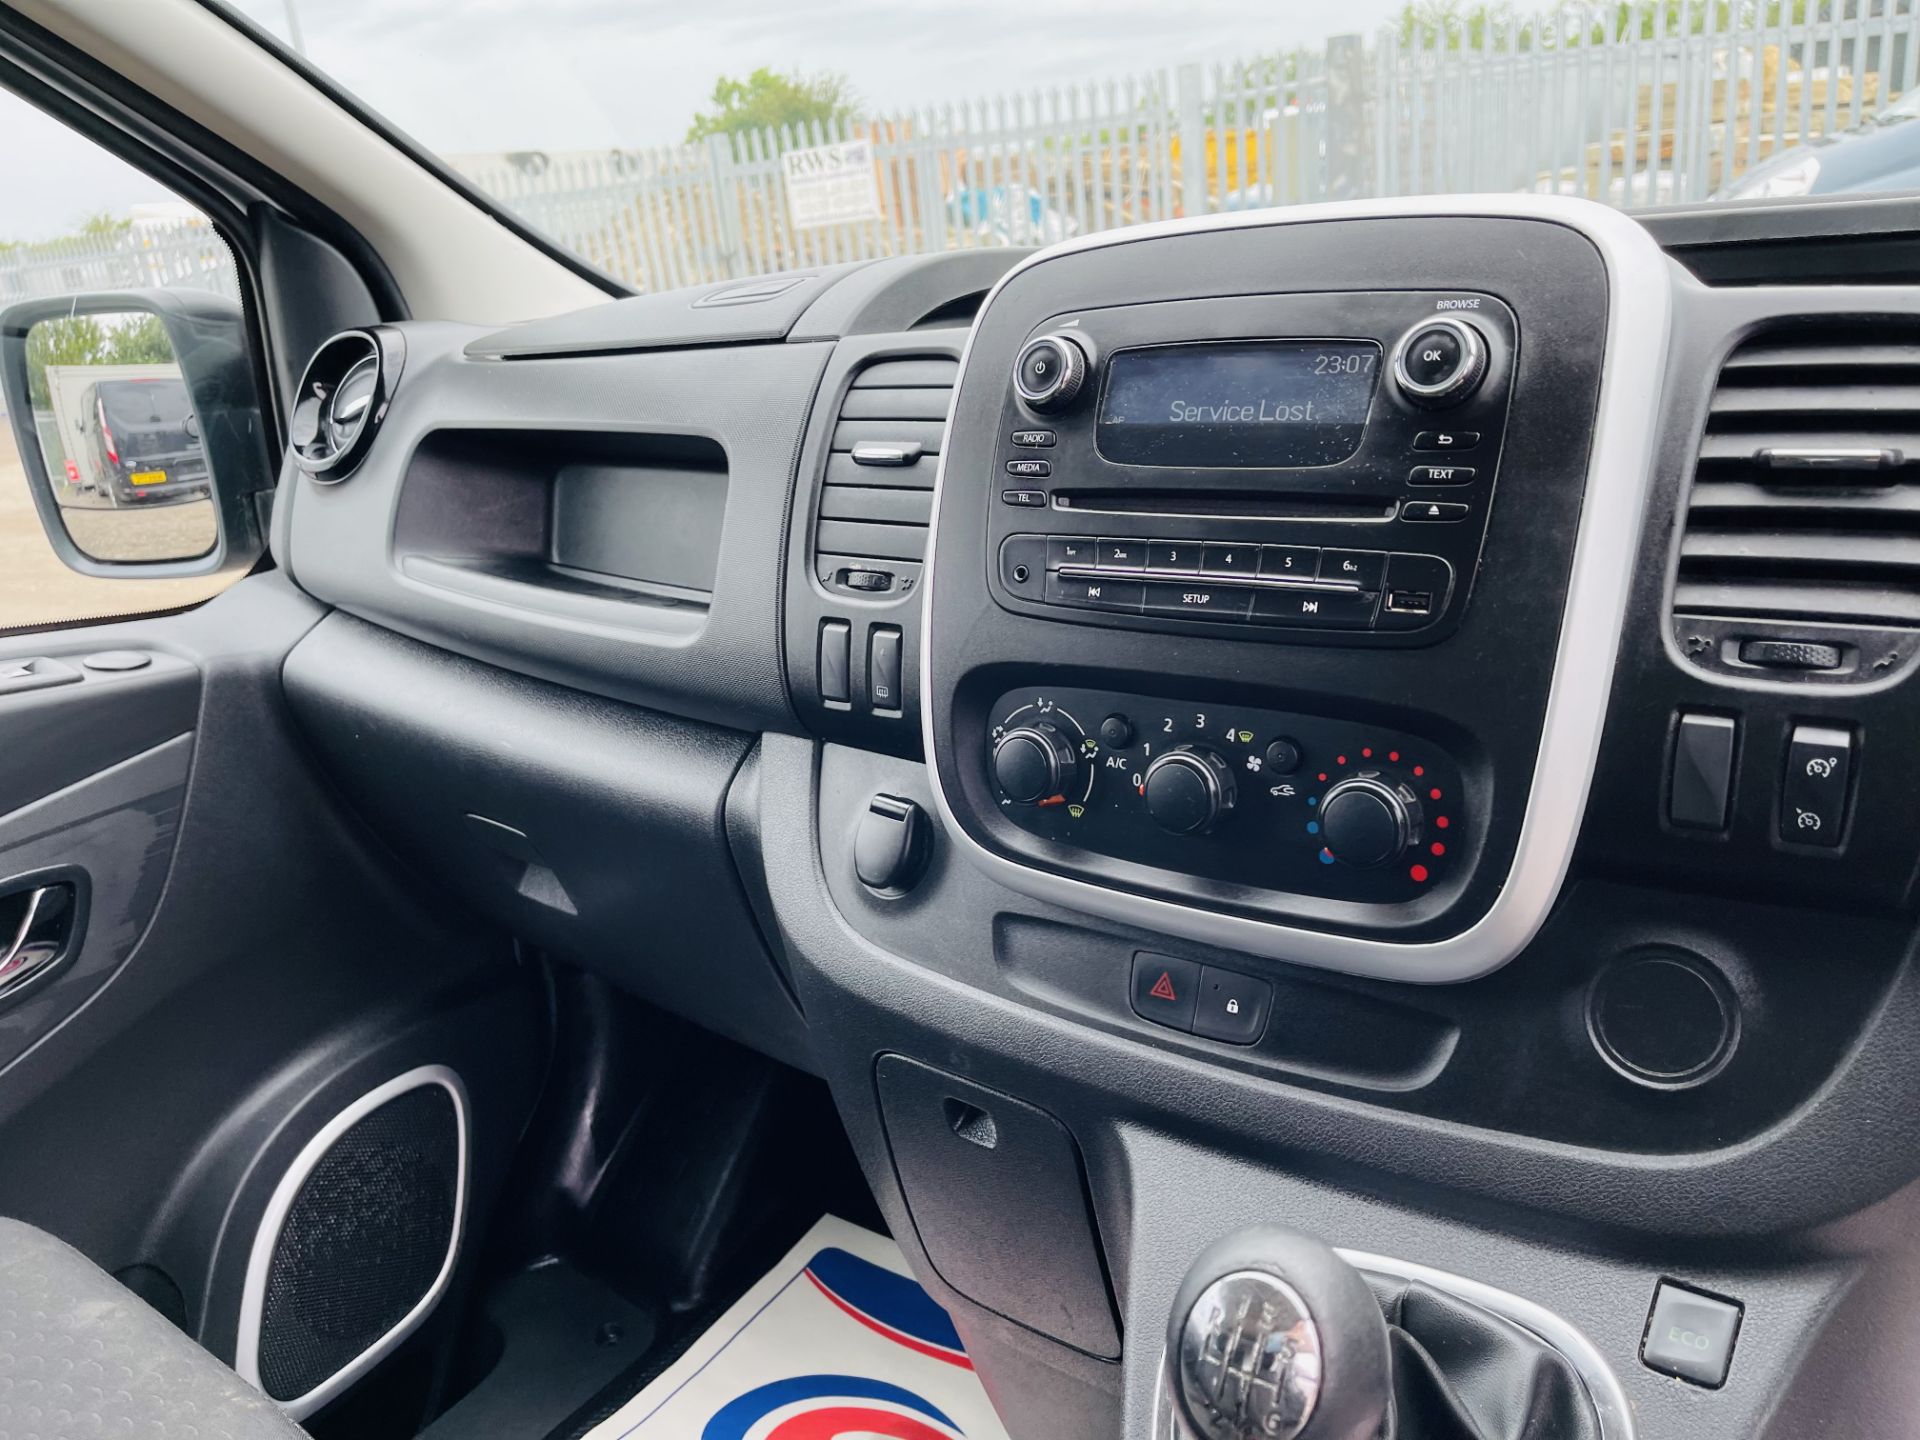 Vauxhall Vivaro 1.6 CDTI Sportive 2700 L1 H1 2015 '65 Reg' Air con - Elec Pack *NO VAT SAVE 20% * - Image 15 of 16